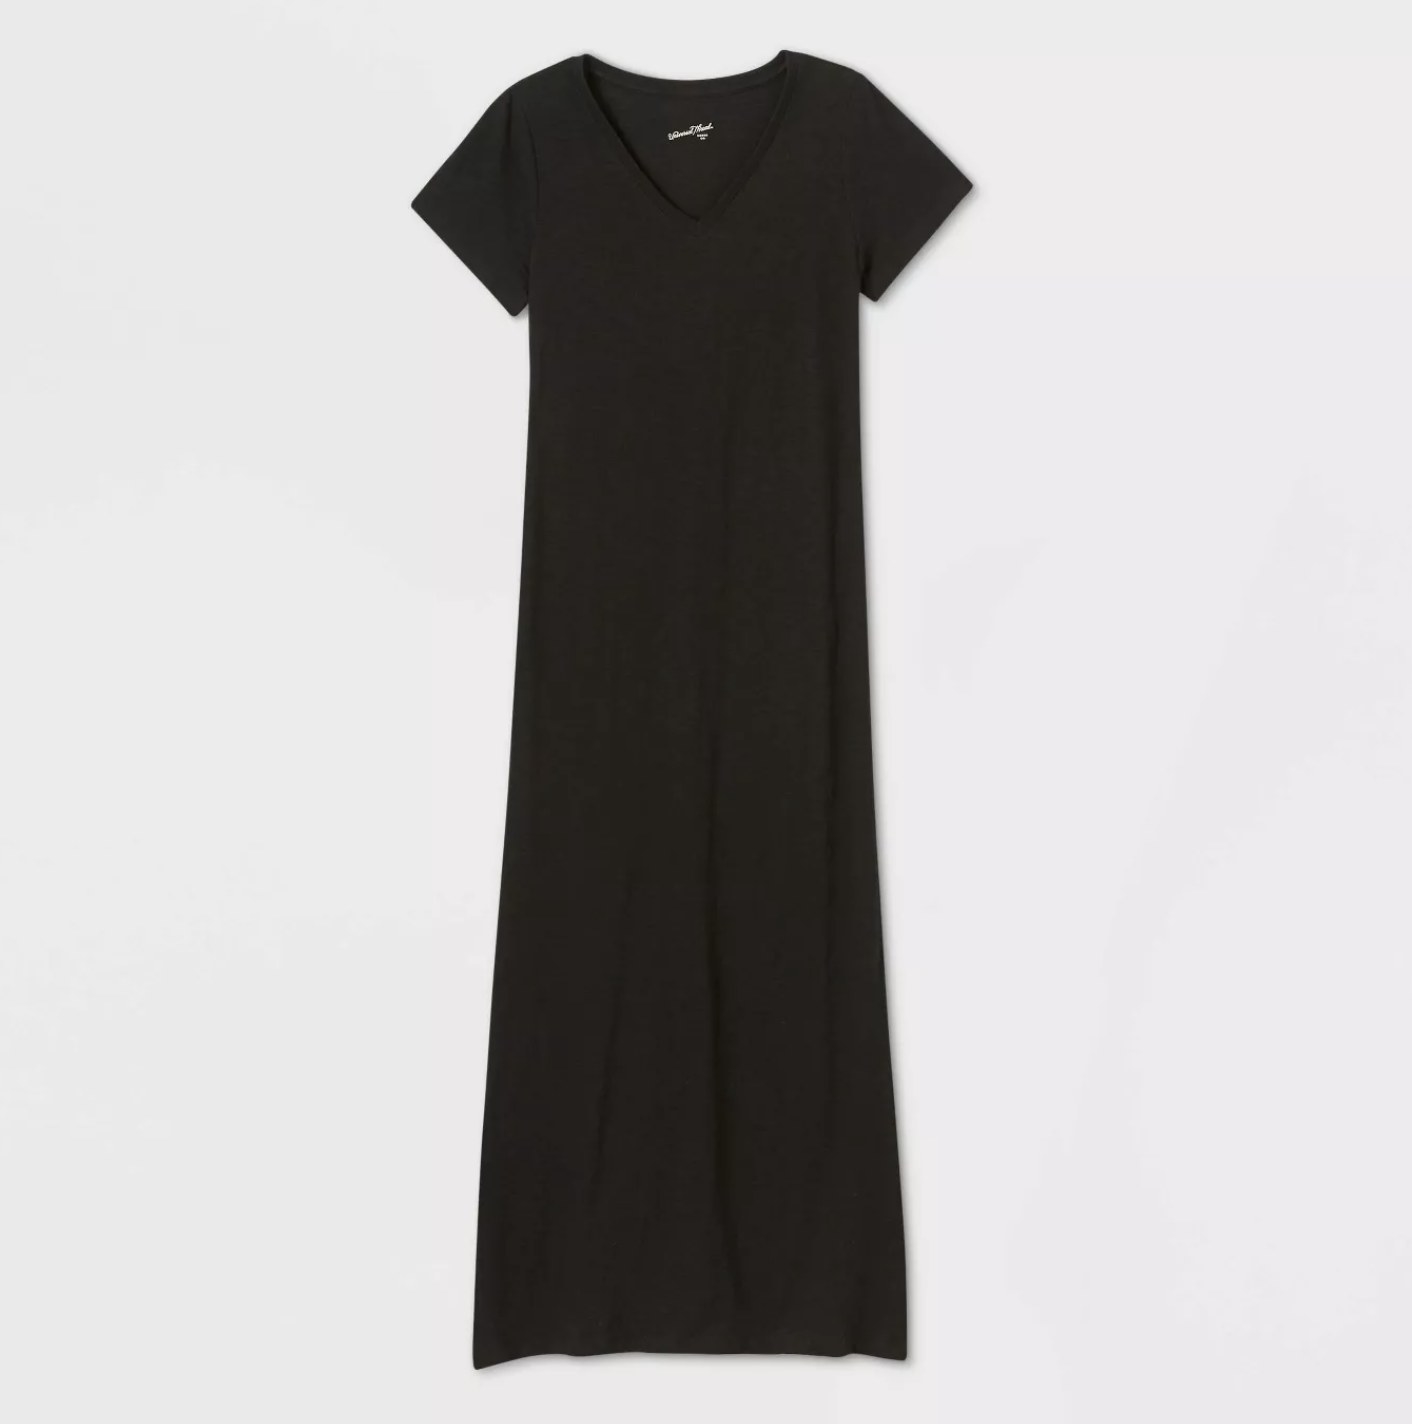 A black short sleeve t-shirt dress with a v-neckline